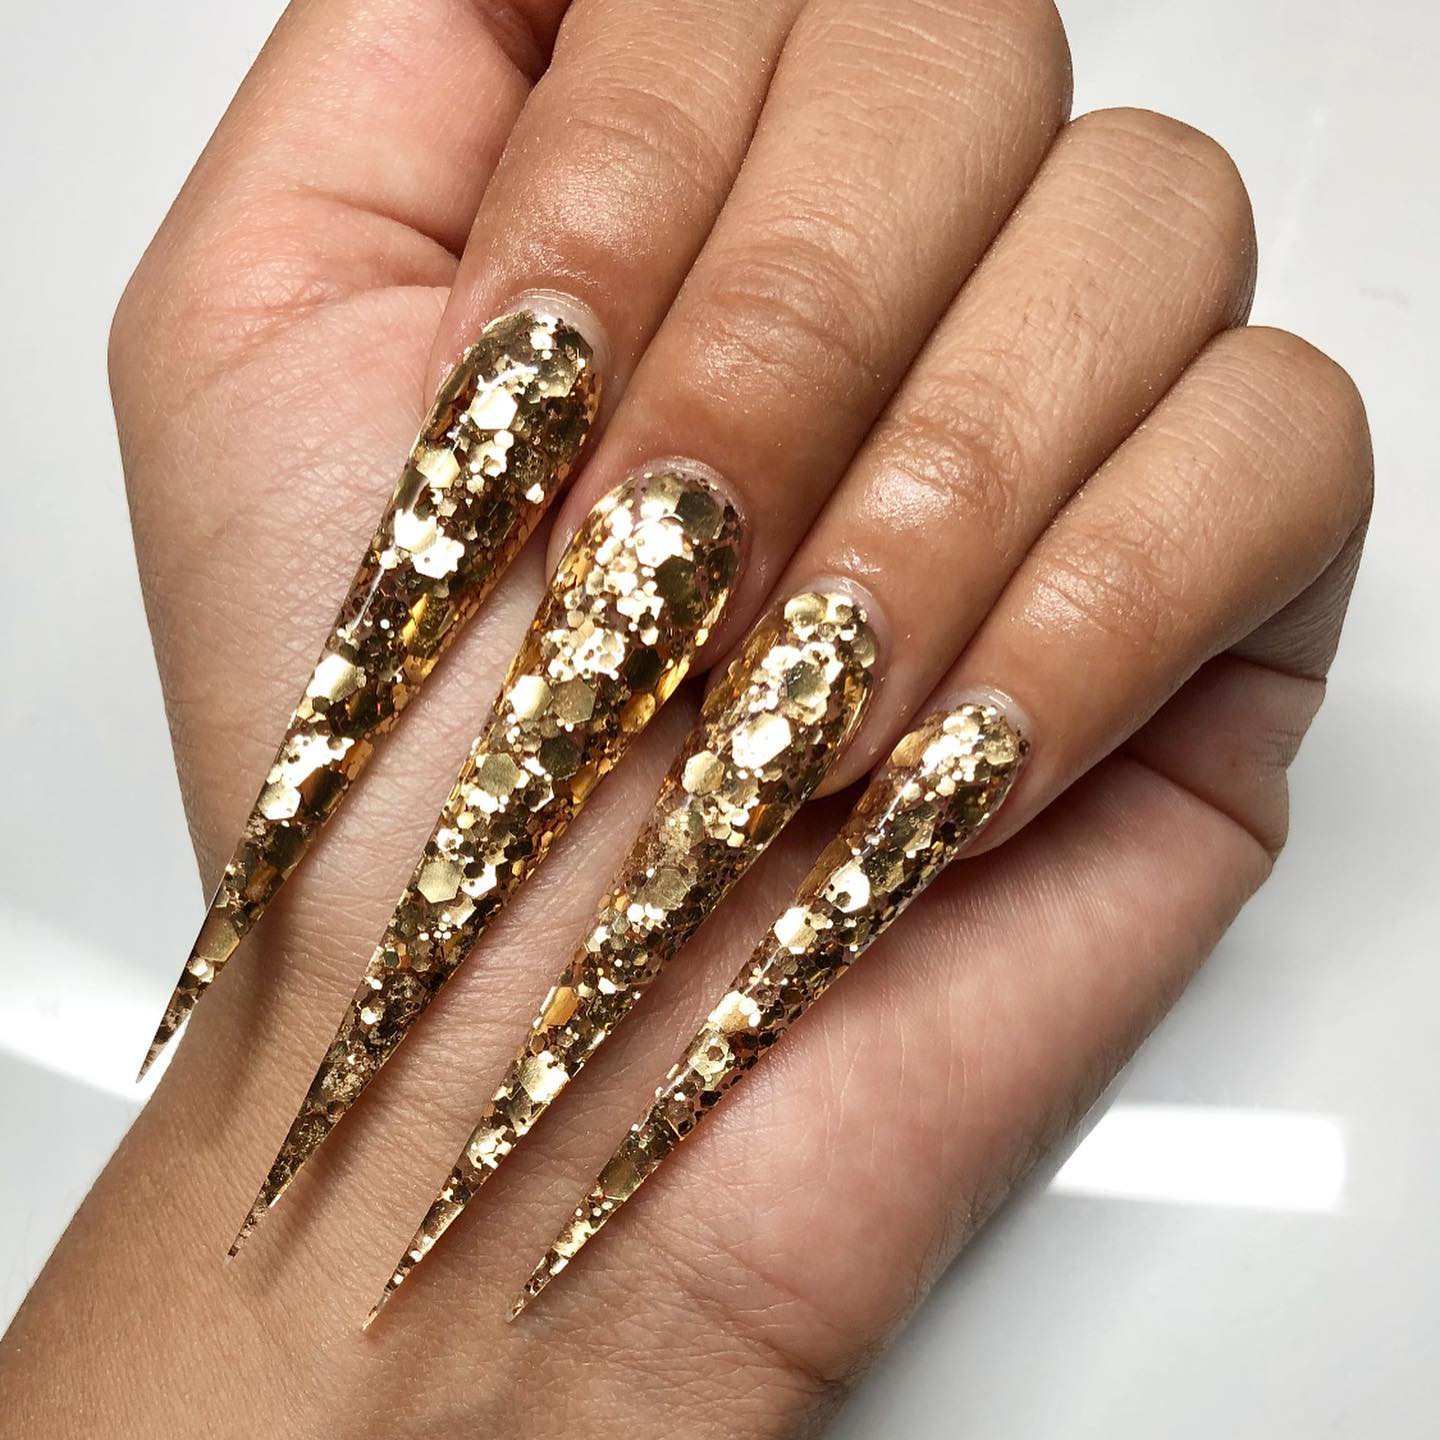 Zeer lange stiletto nagels met gouden glitter